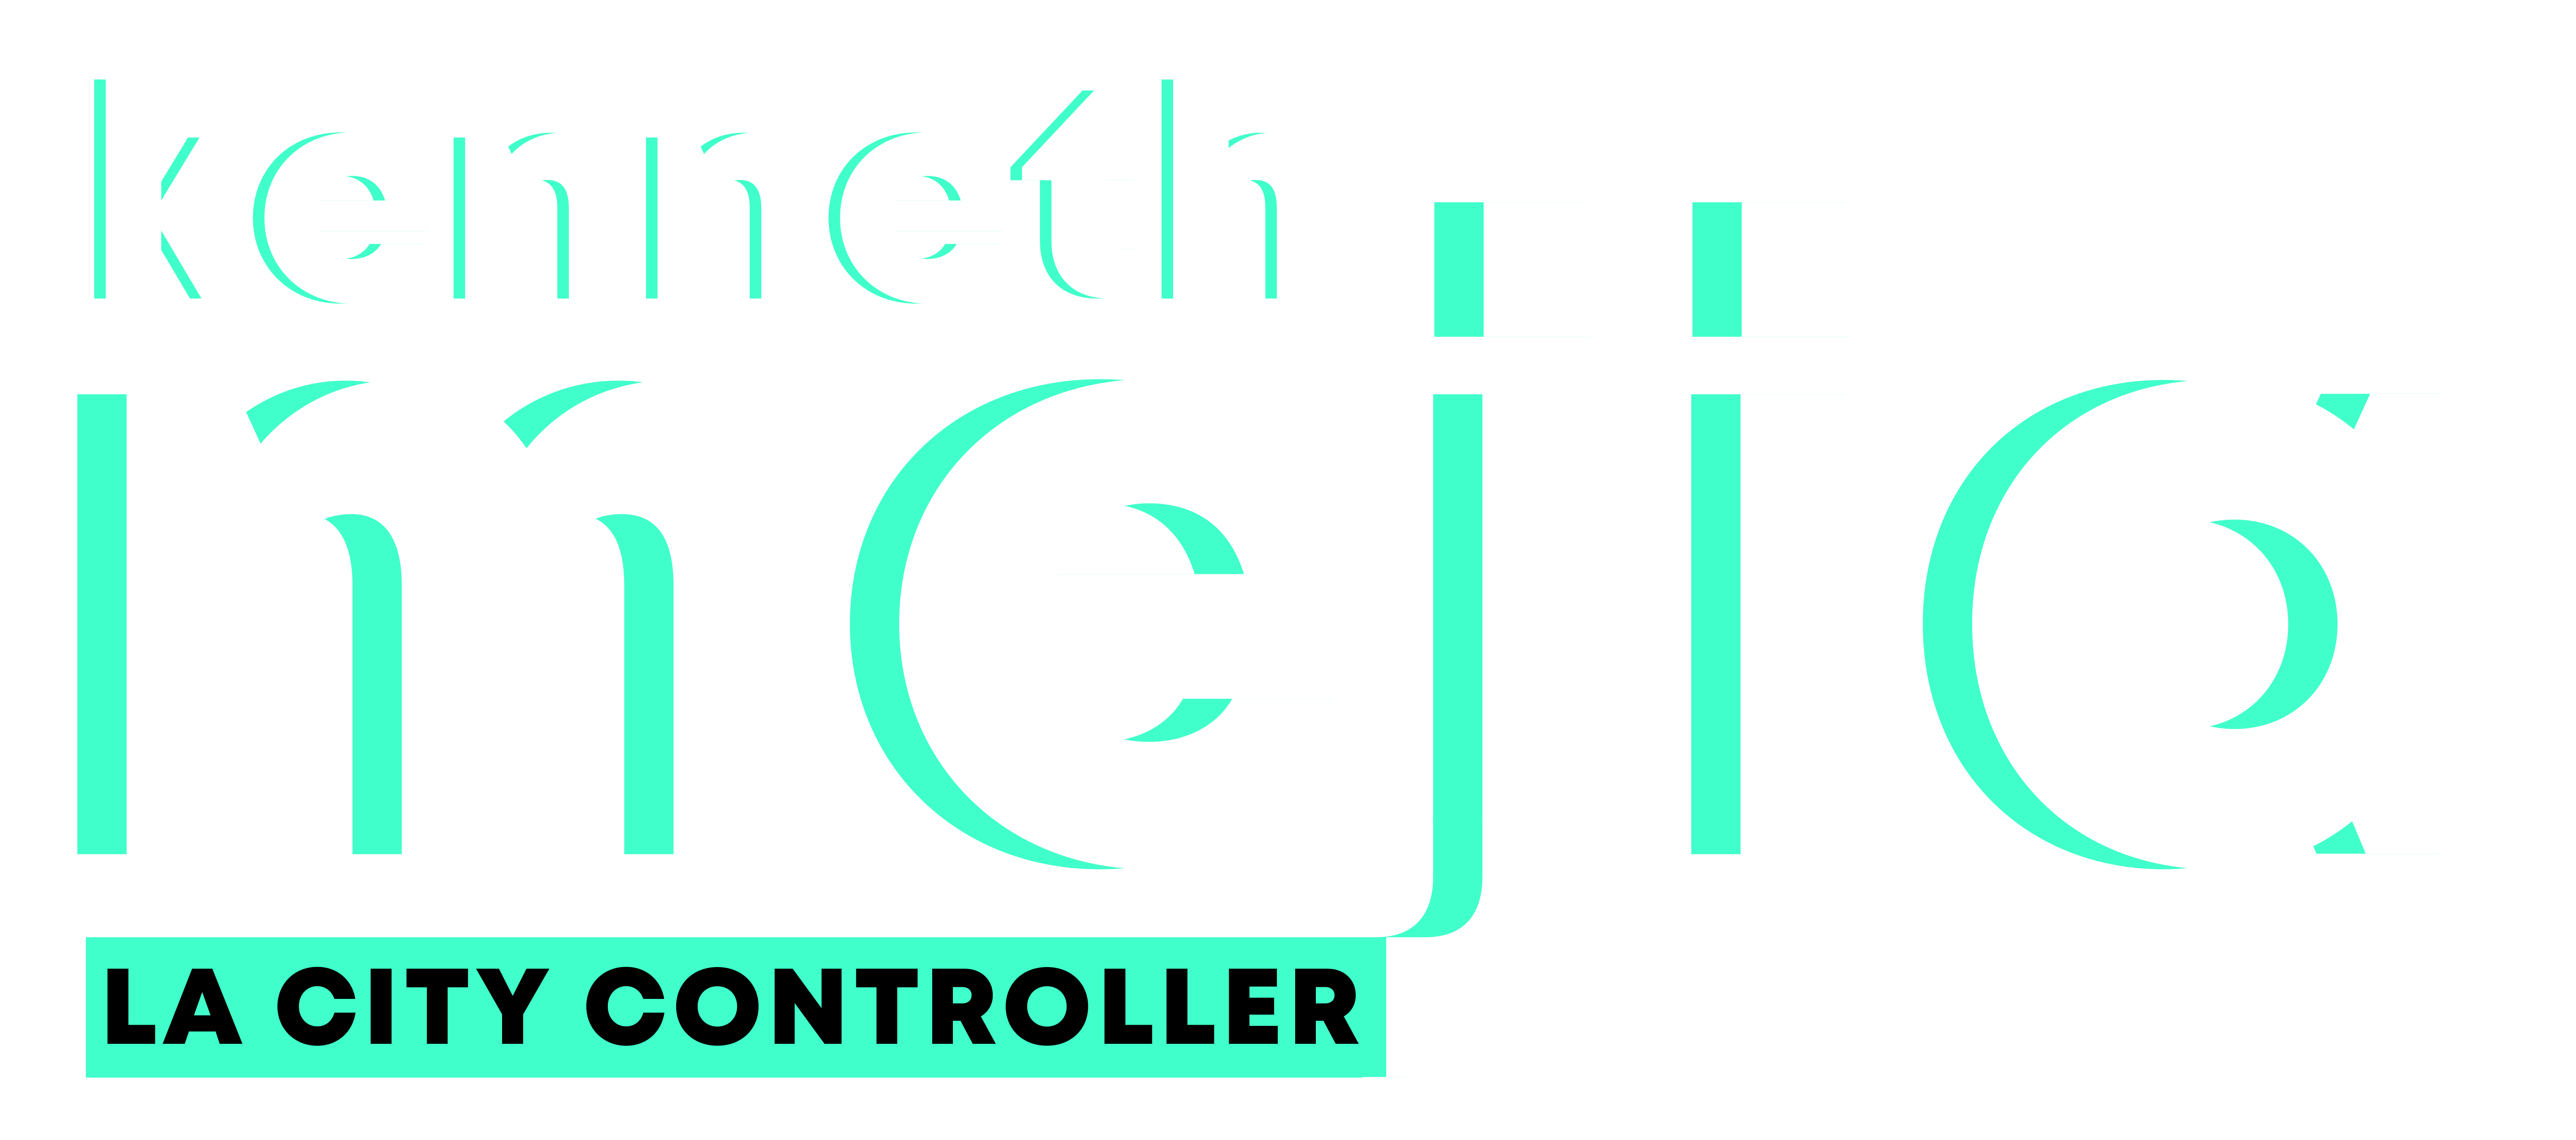 Kenneth Mejia LA City Controller Logo